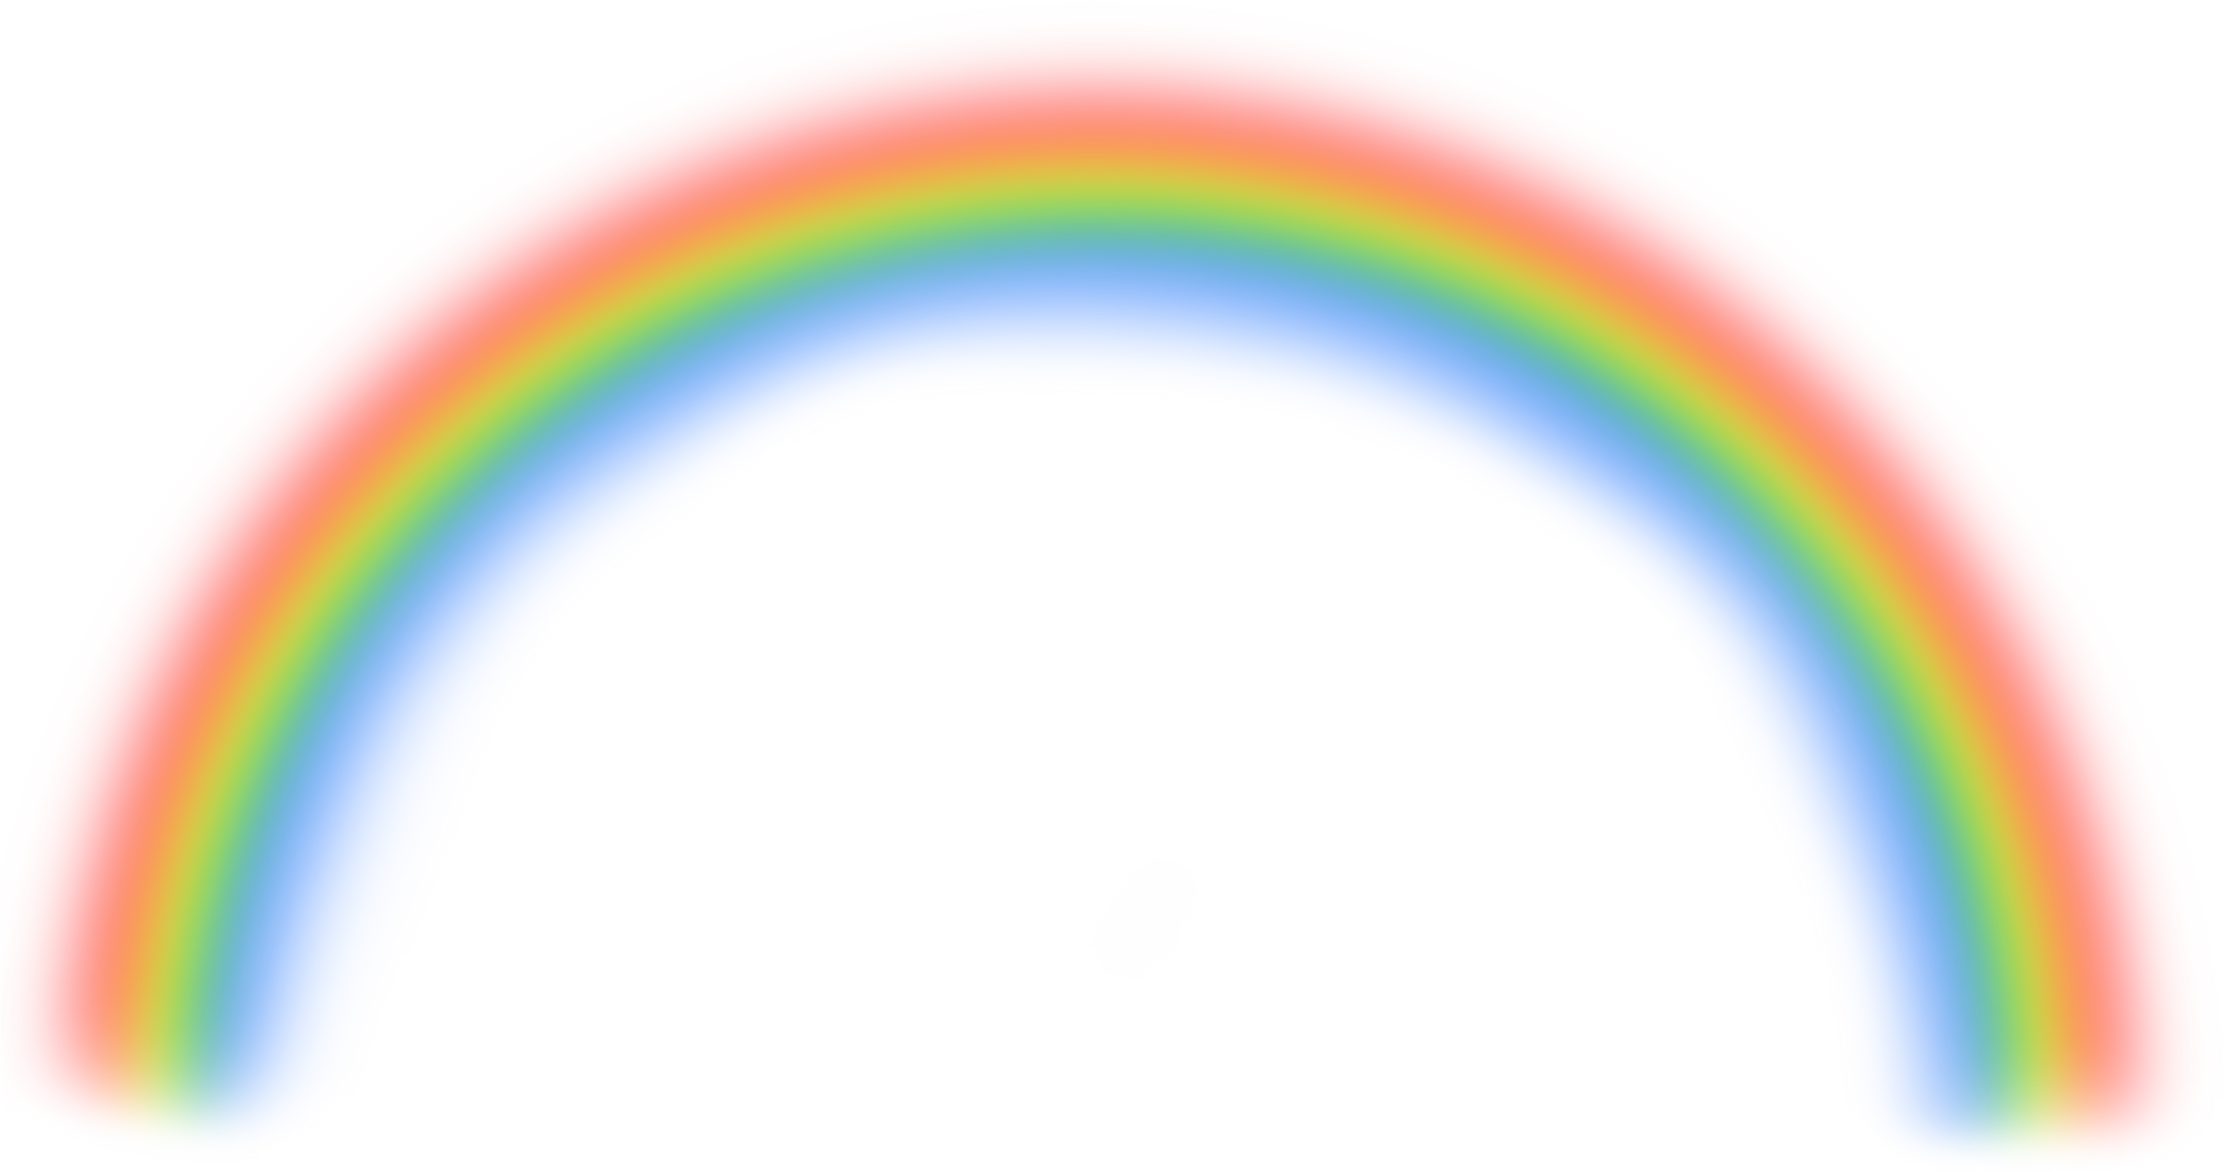 Rainbow Arc Illustration